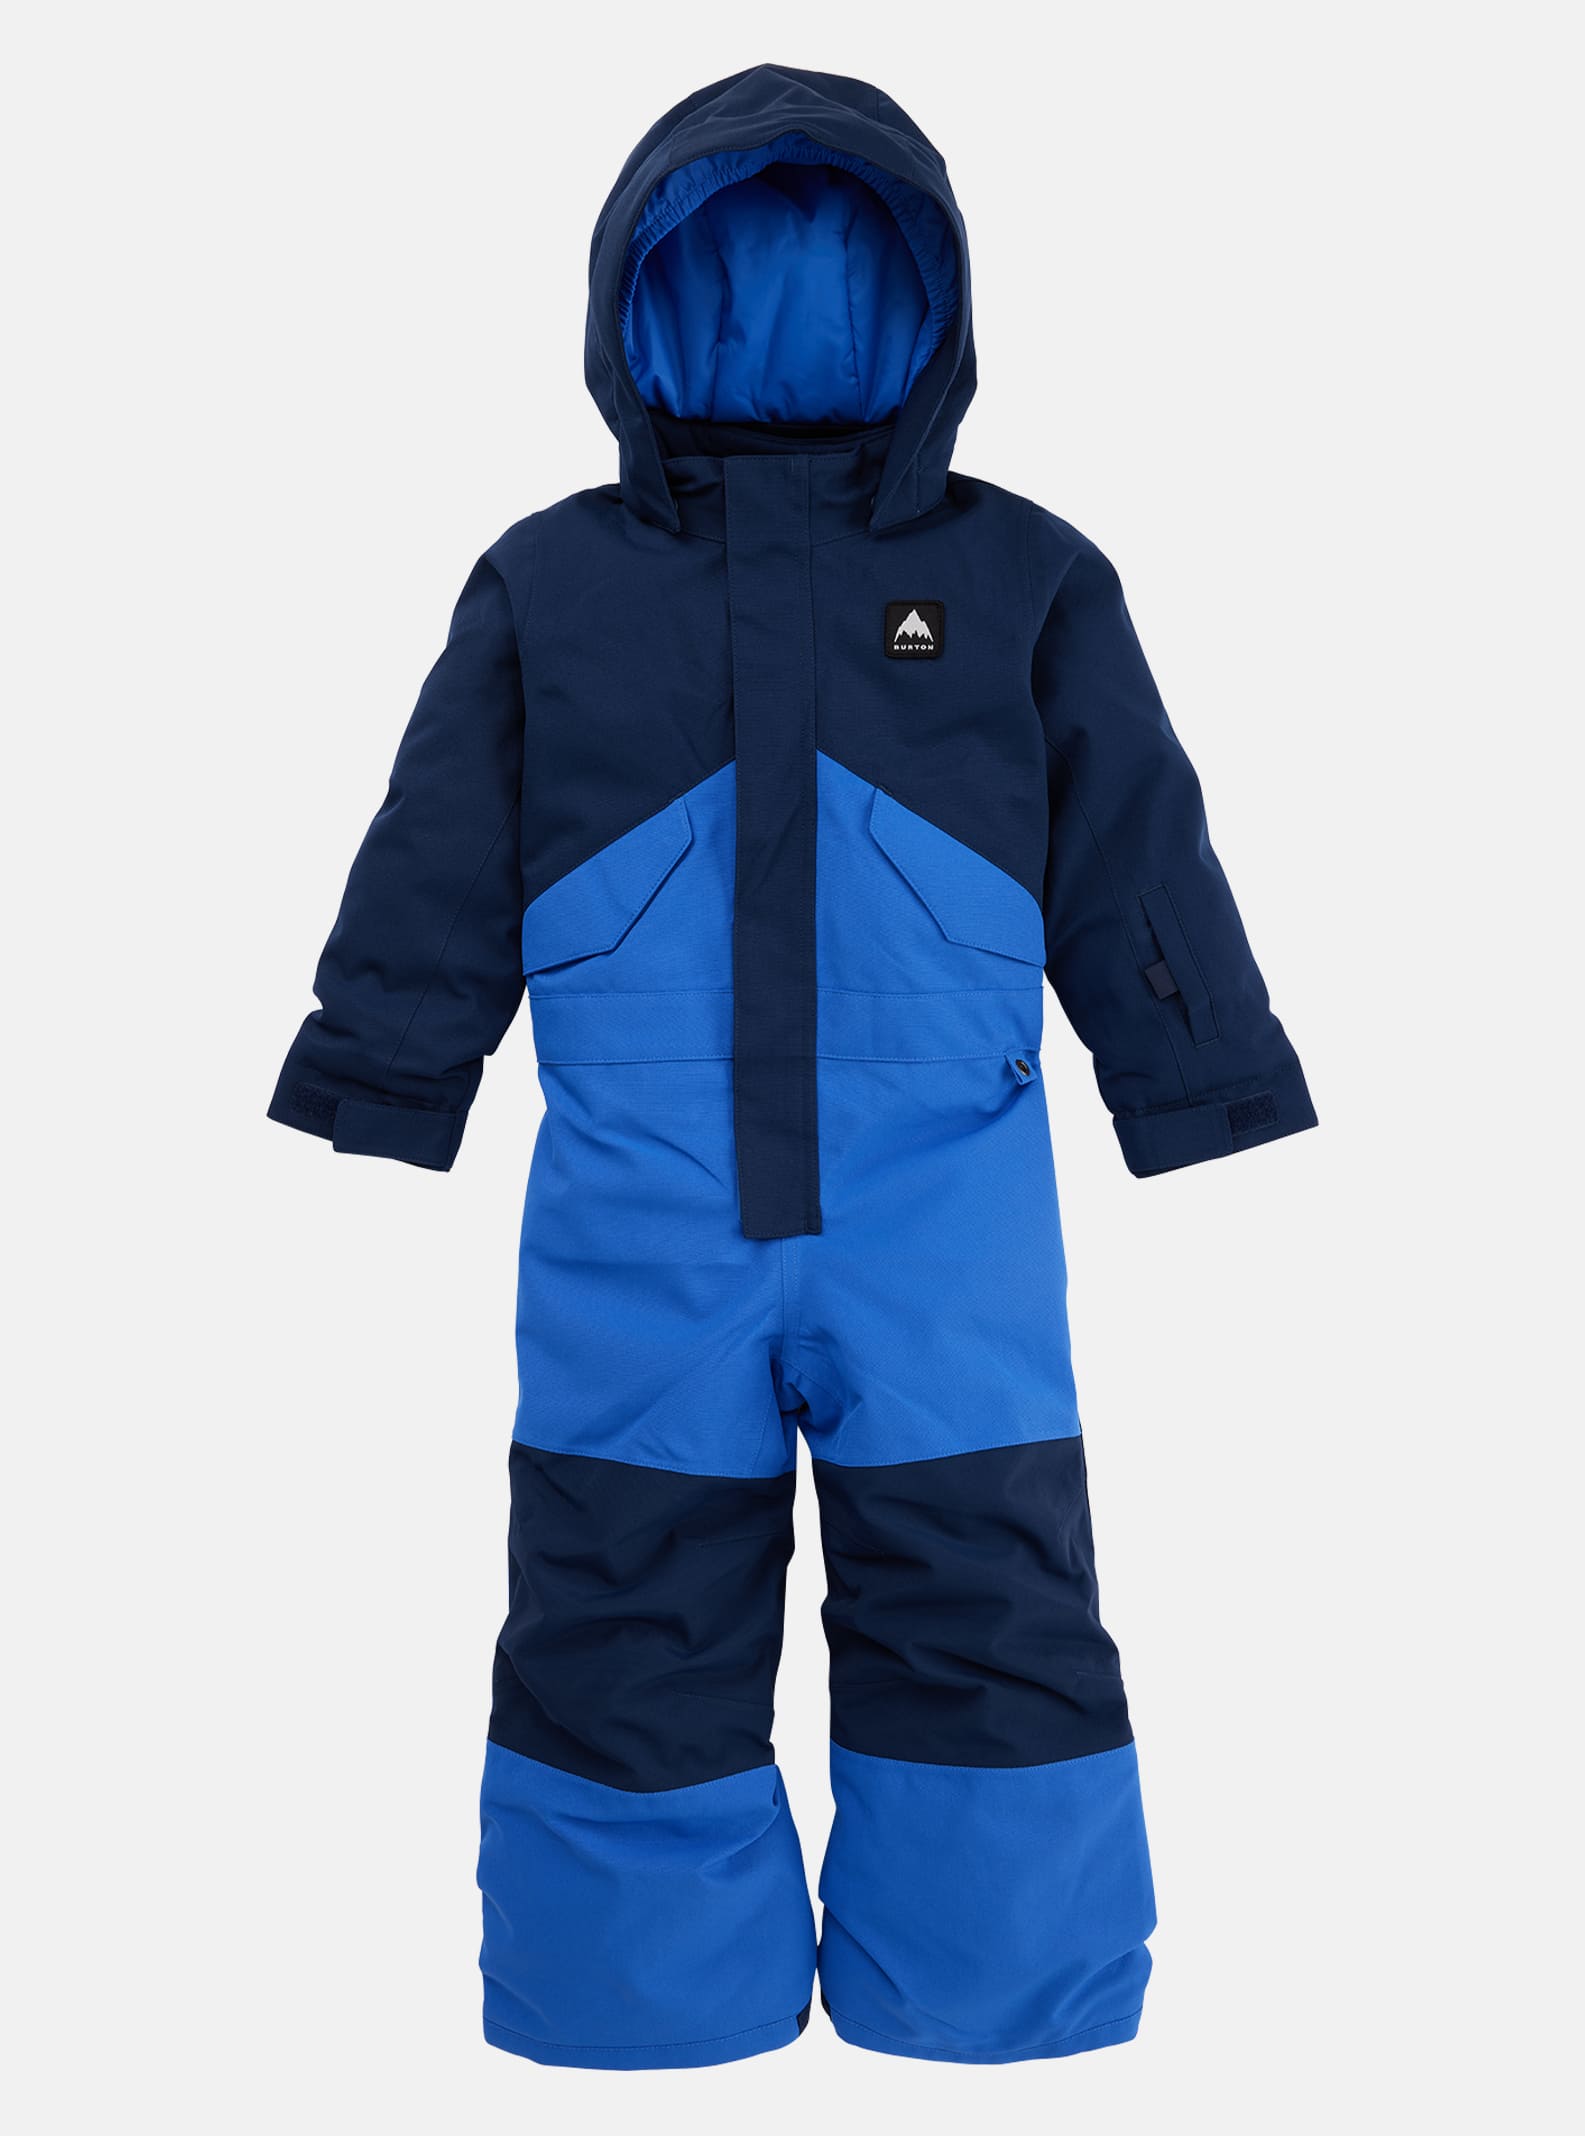 Toddlers' Burton Outerwear, Clothing & Accessories | Burton Snowboards US